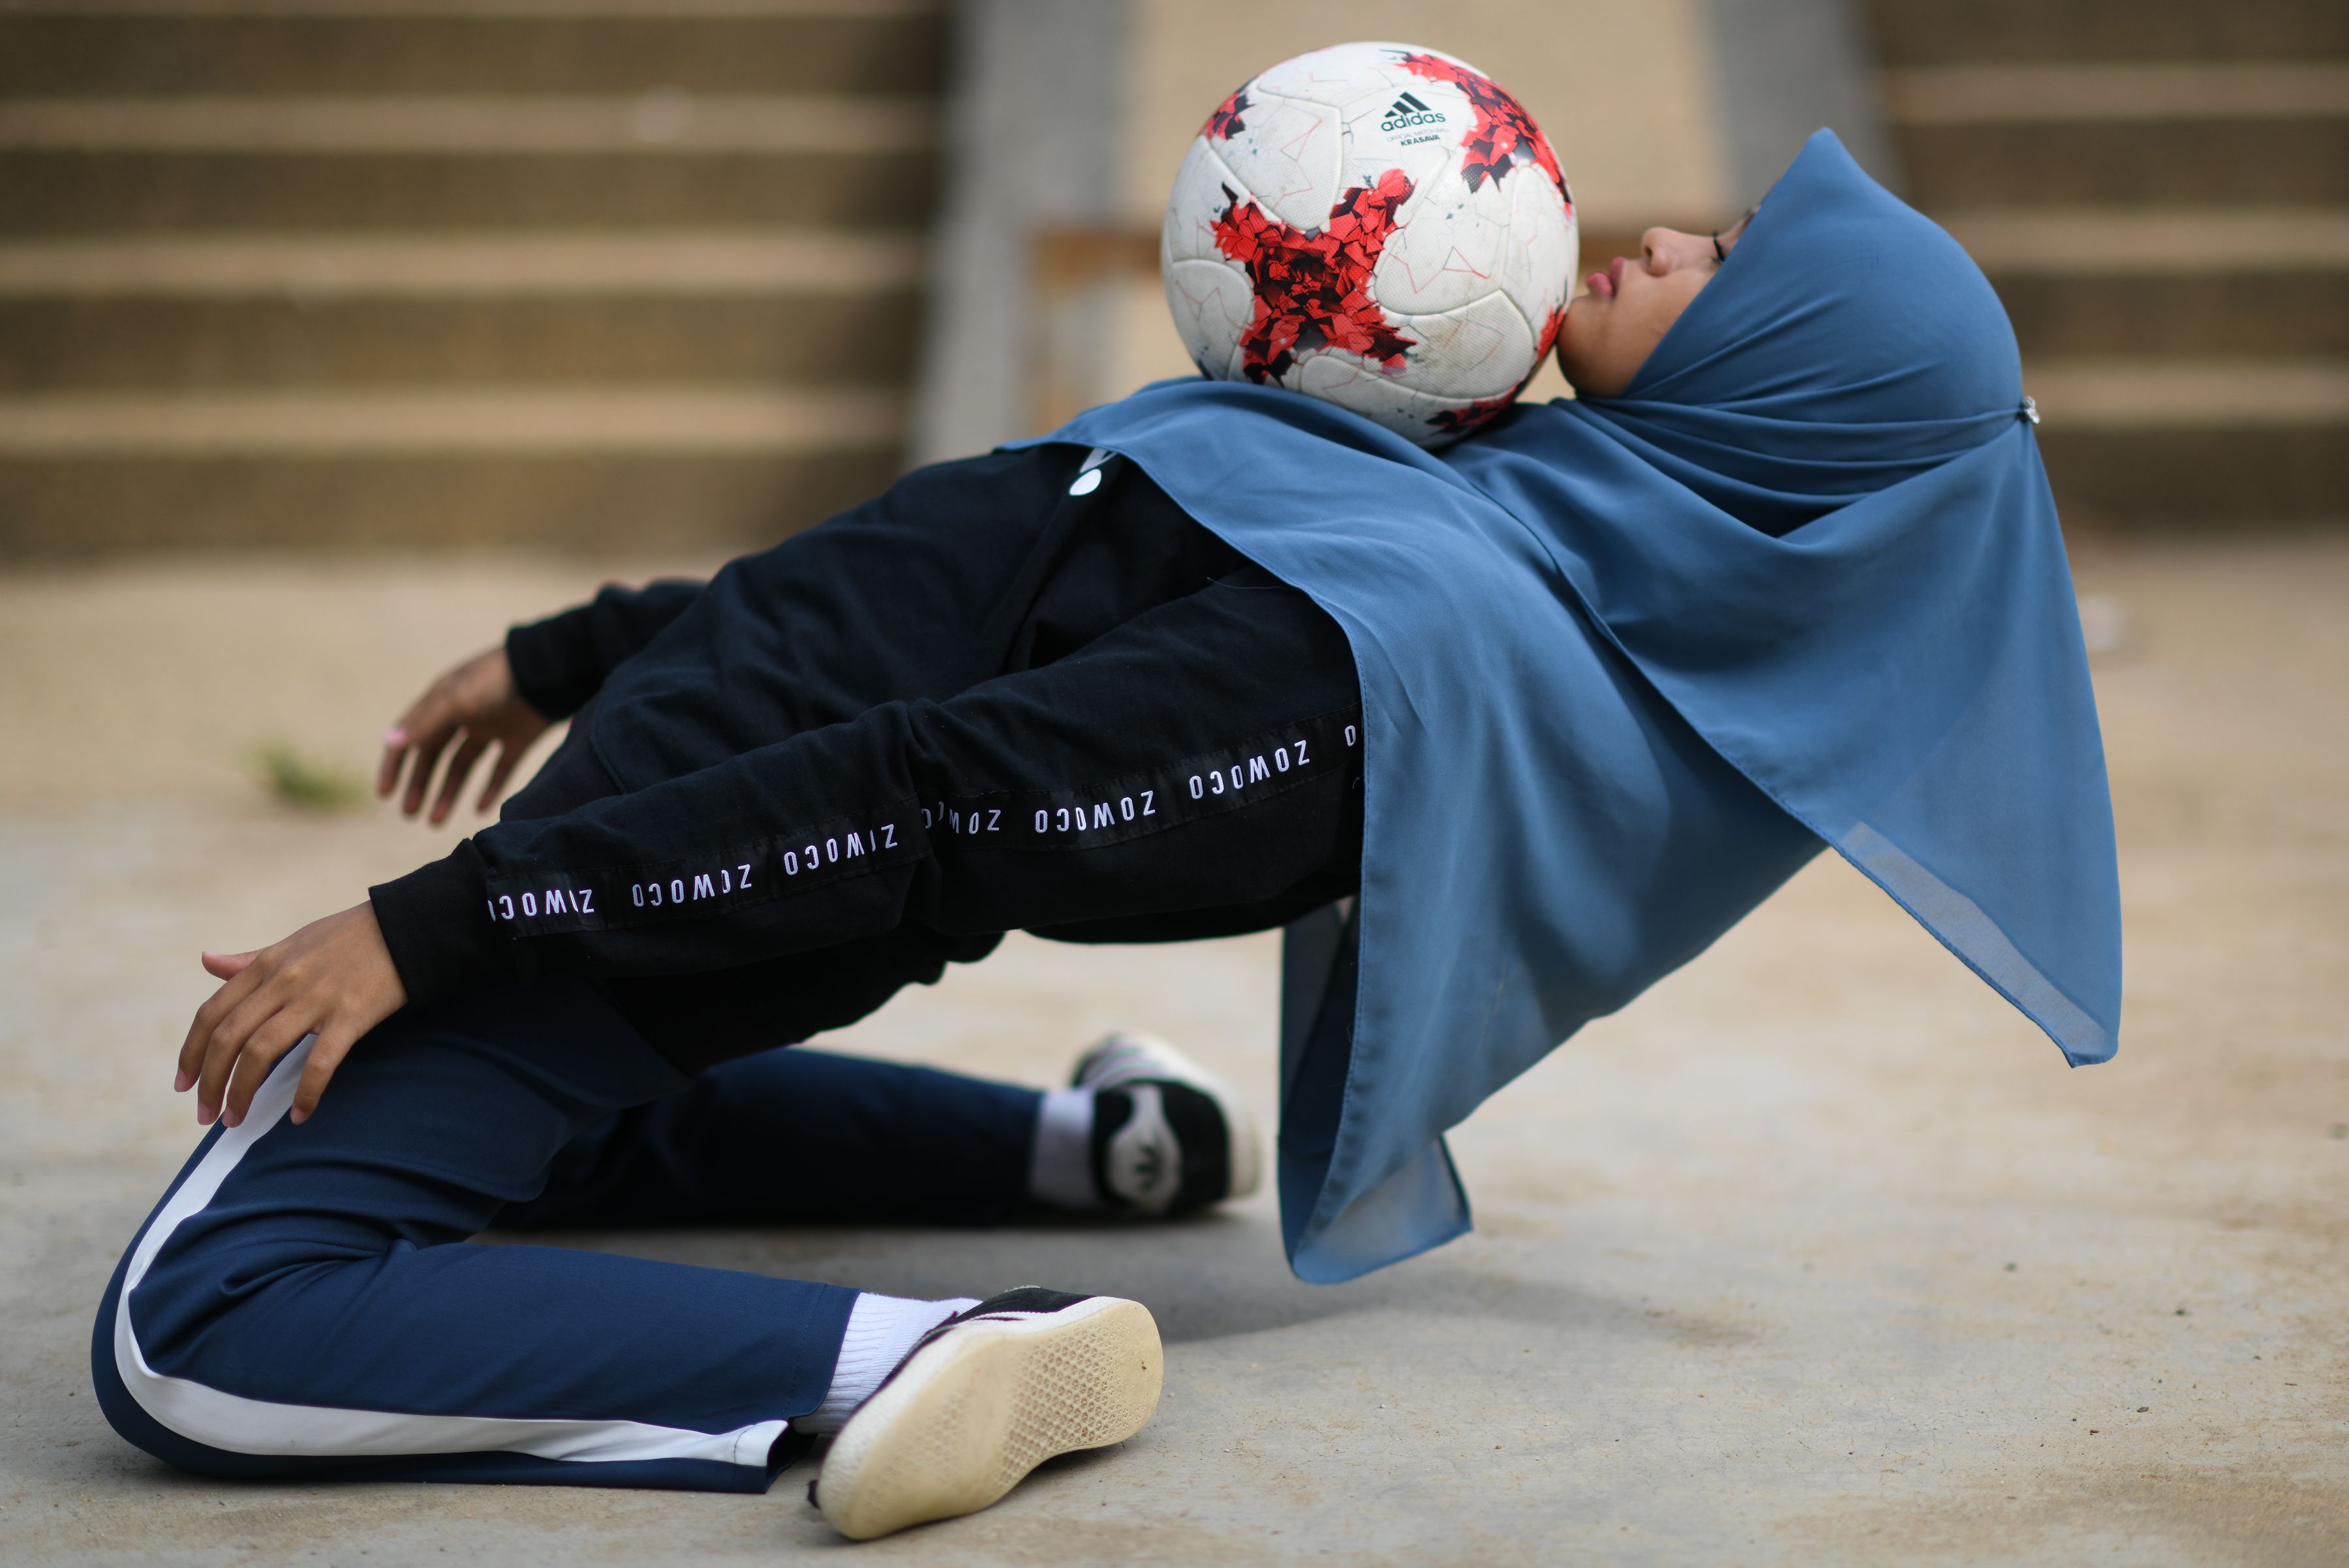 A girl balancing a soccer ball on her body